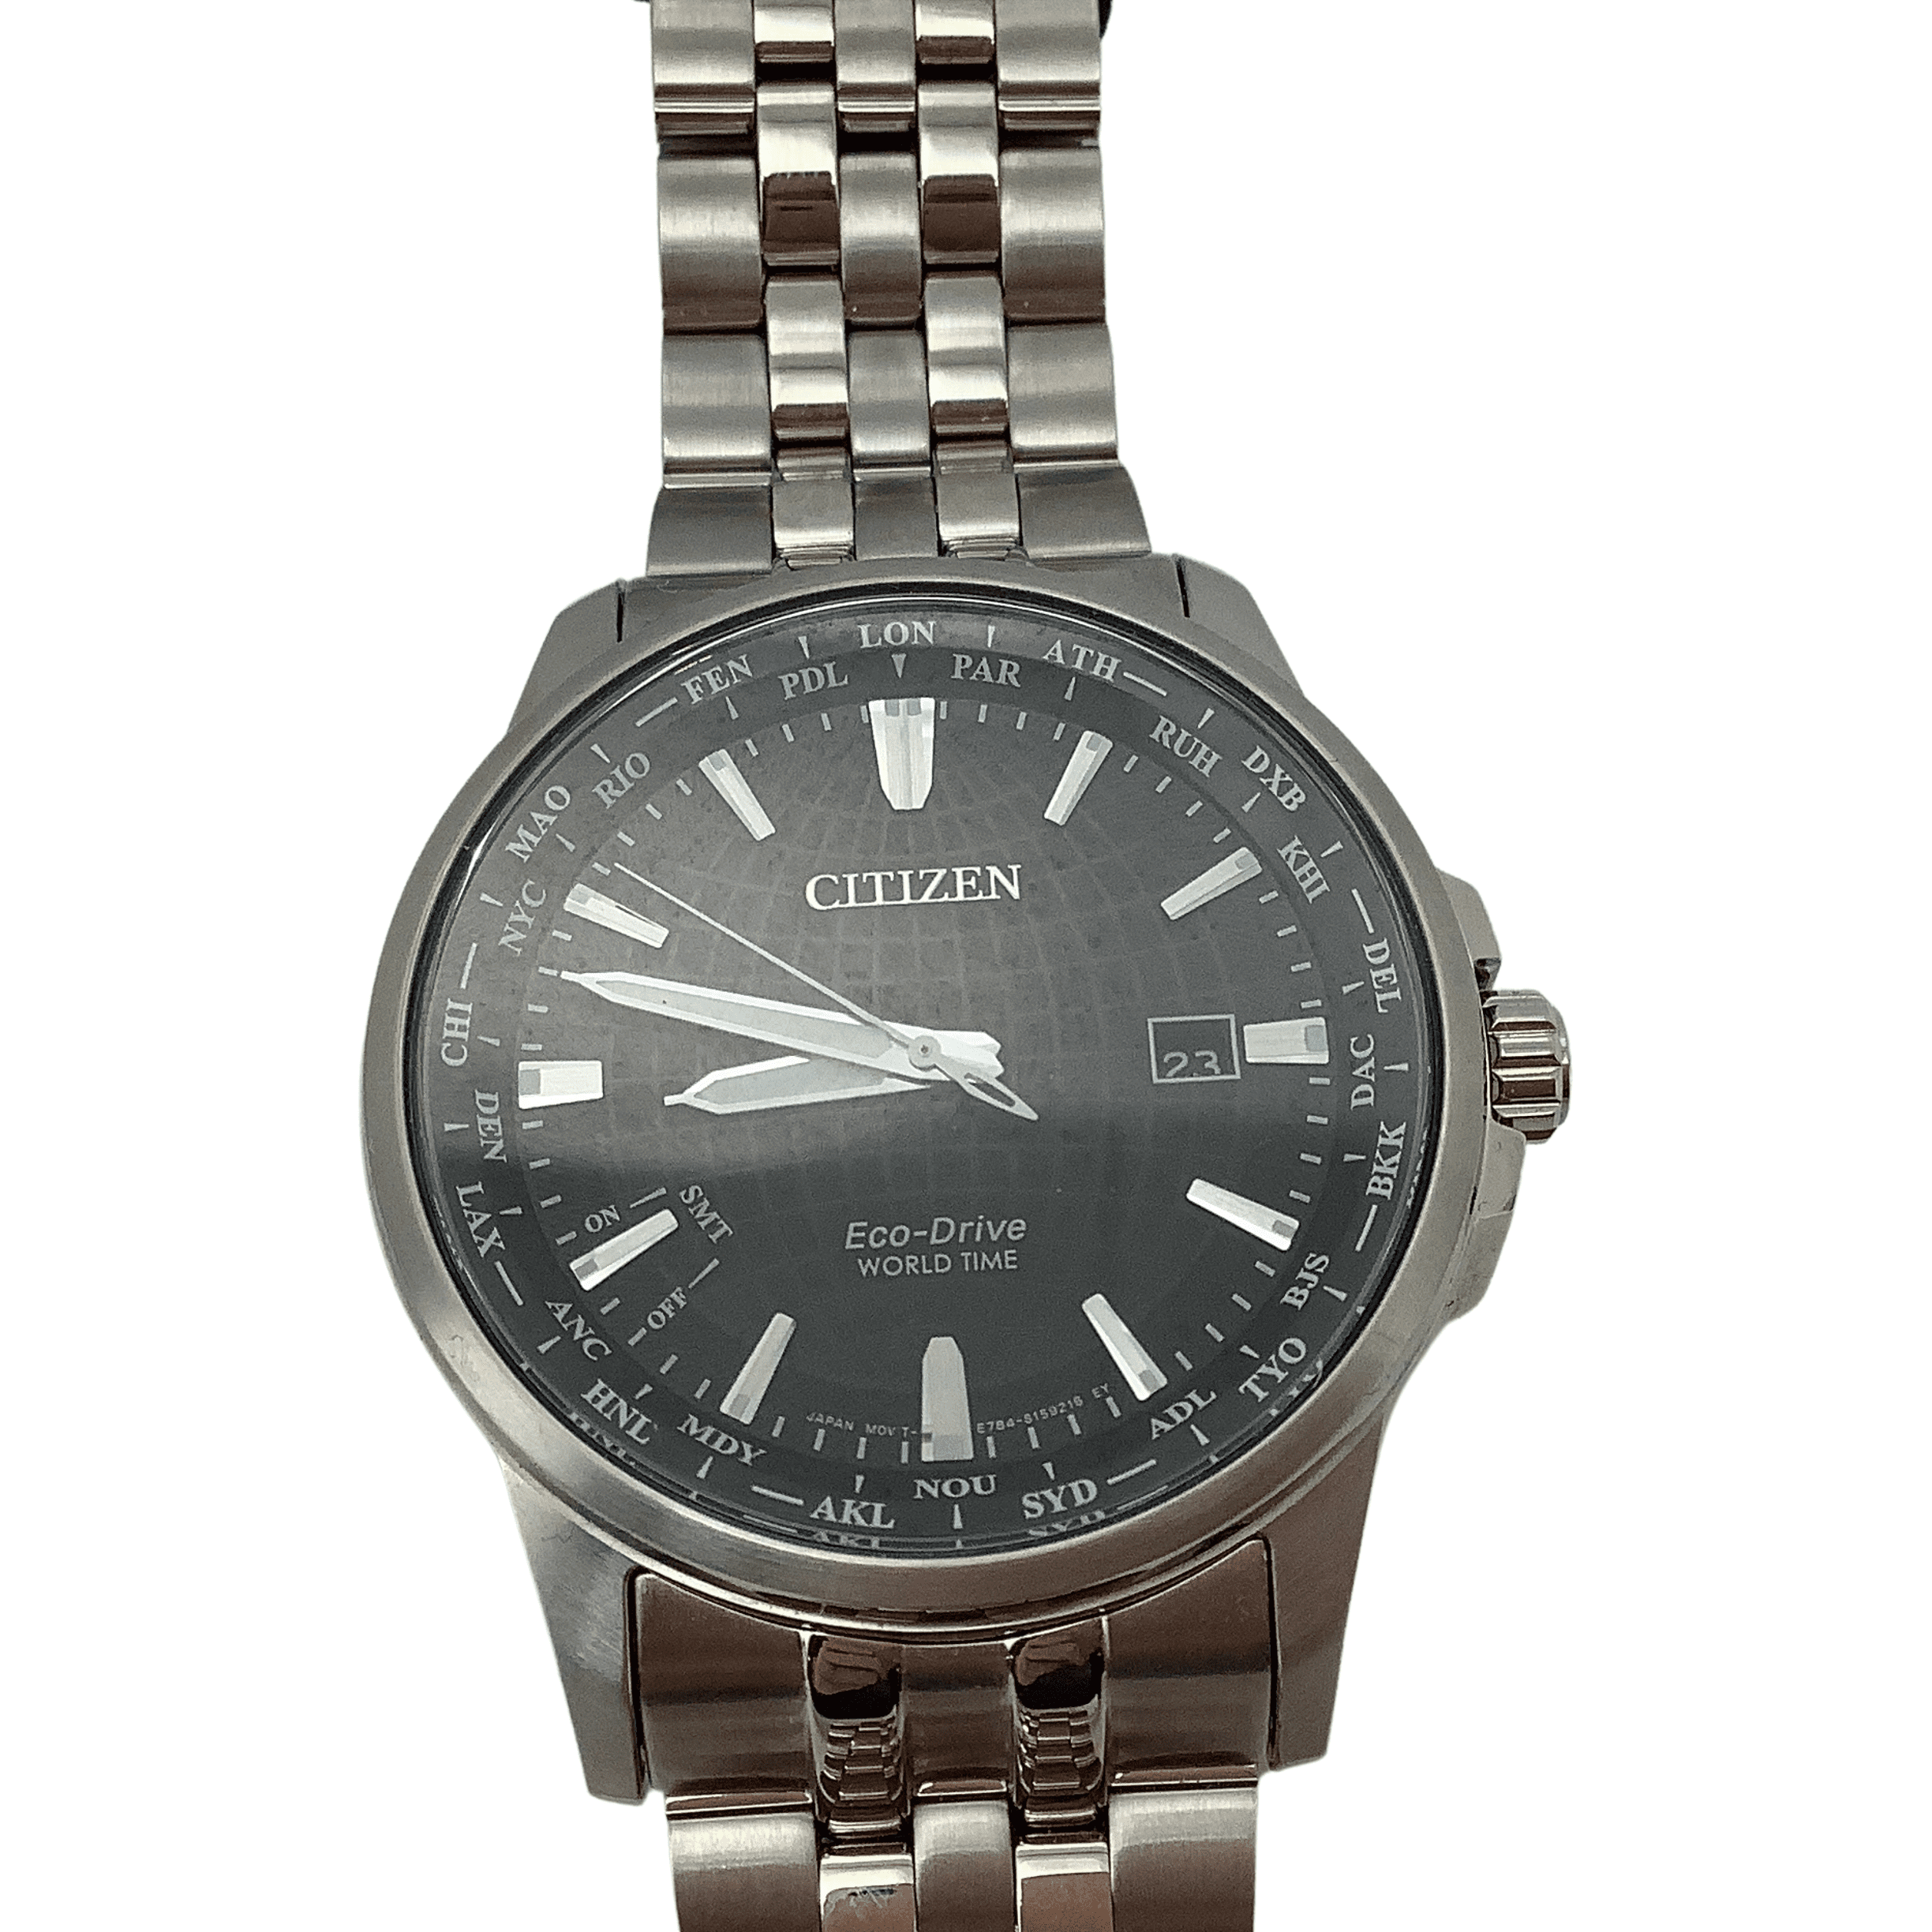 Citizen Men's Analog Wrist Watch / Black and Silver / Stainless Steel / Men's Accessories